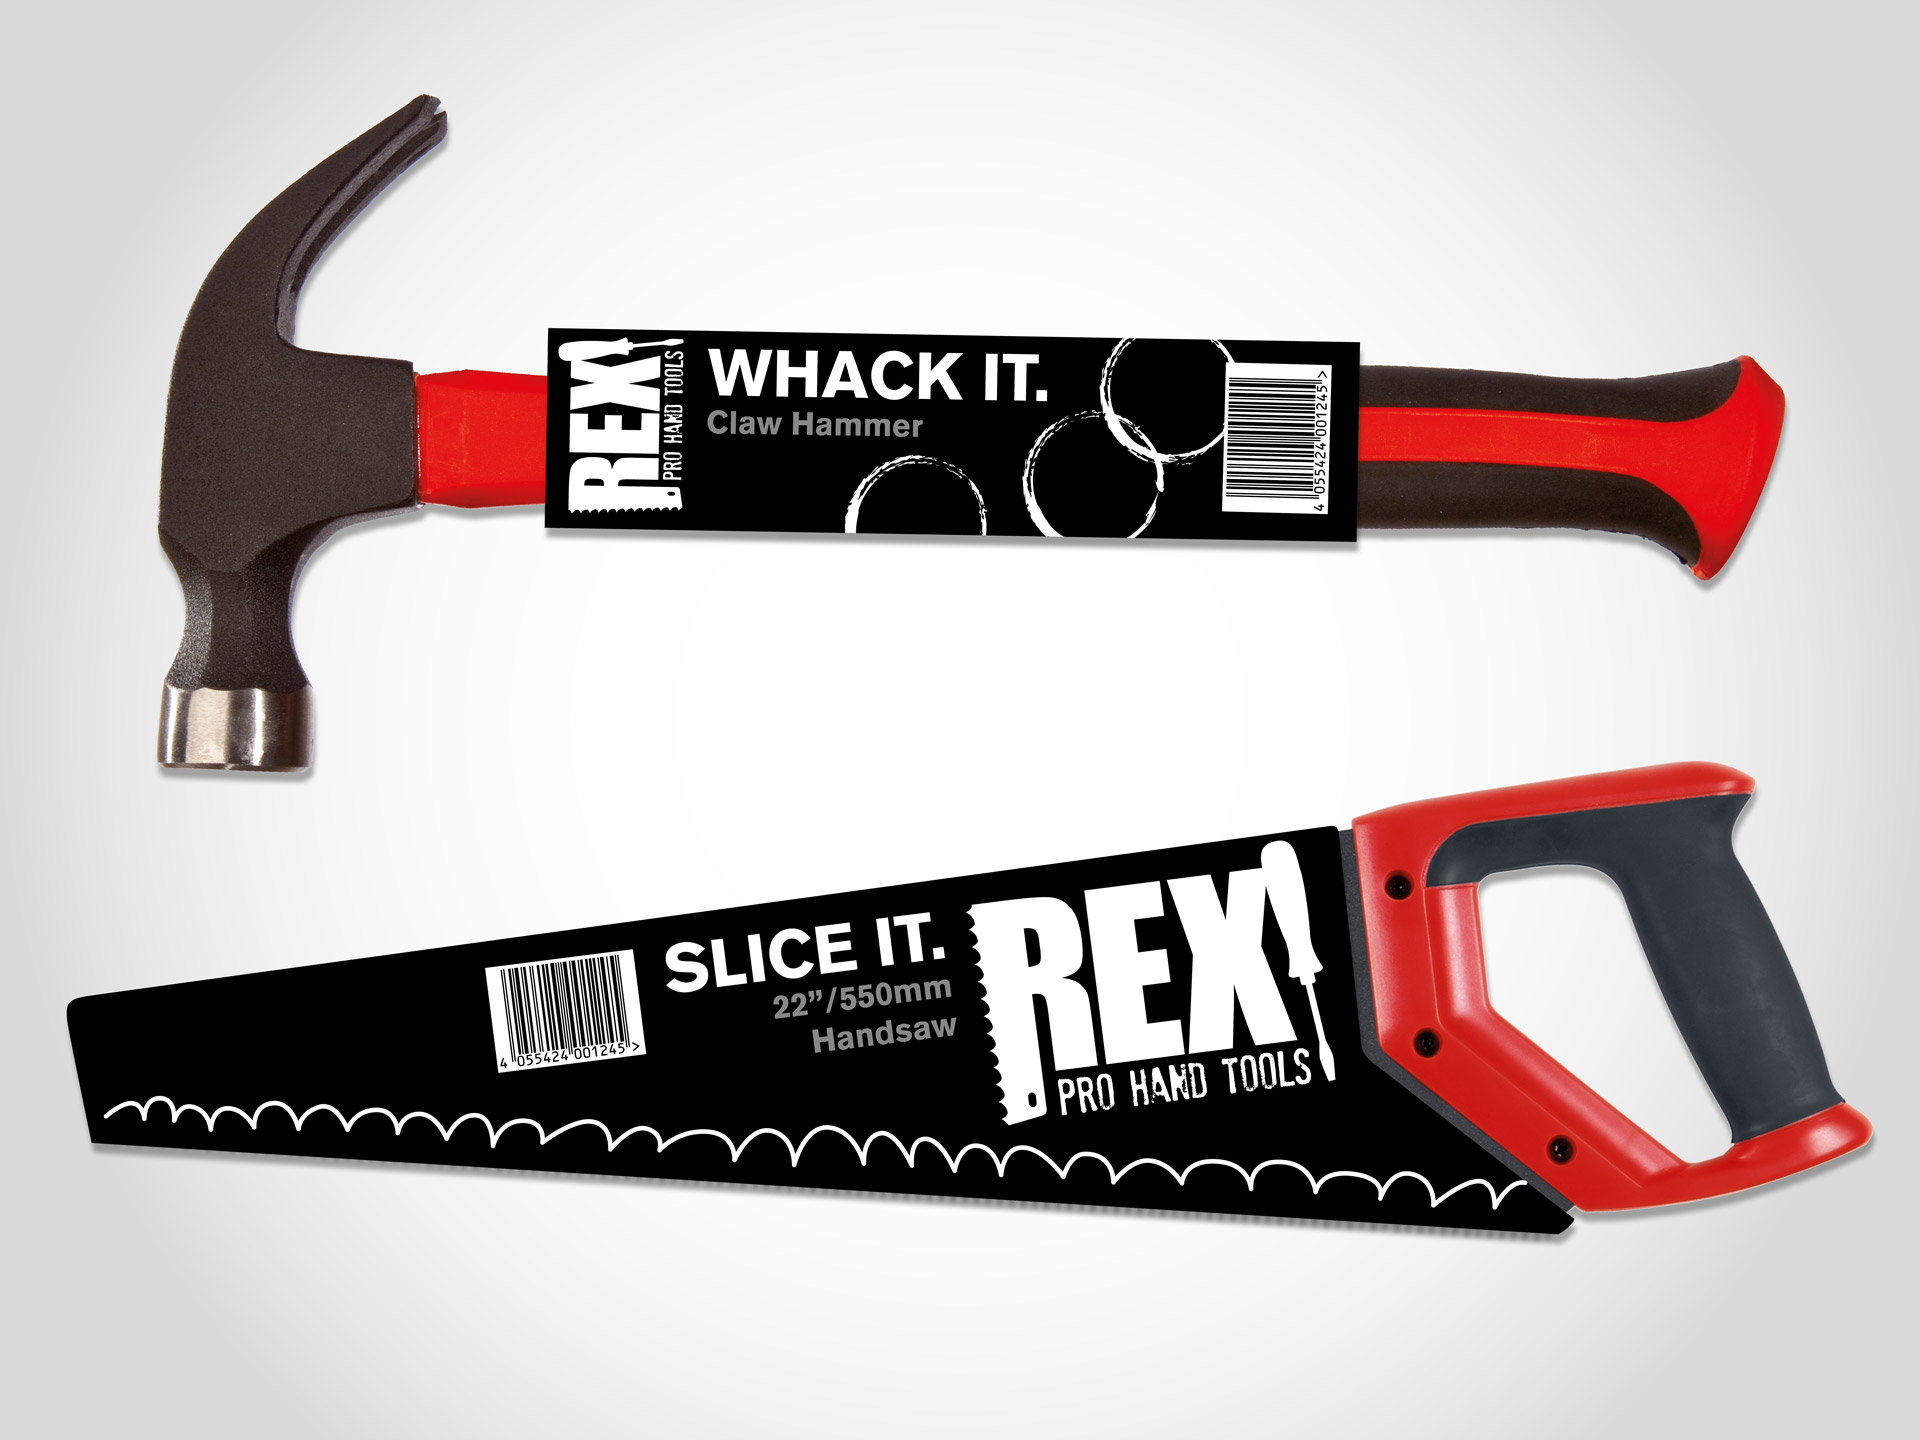 Rex Hand Tools packaging